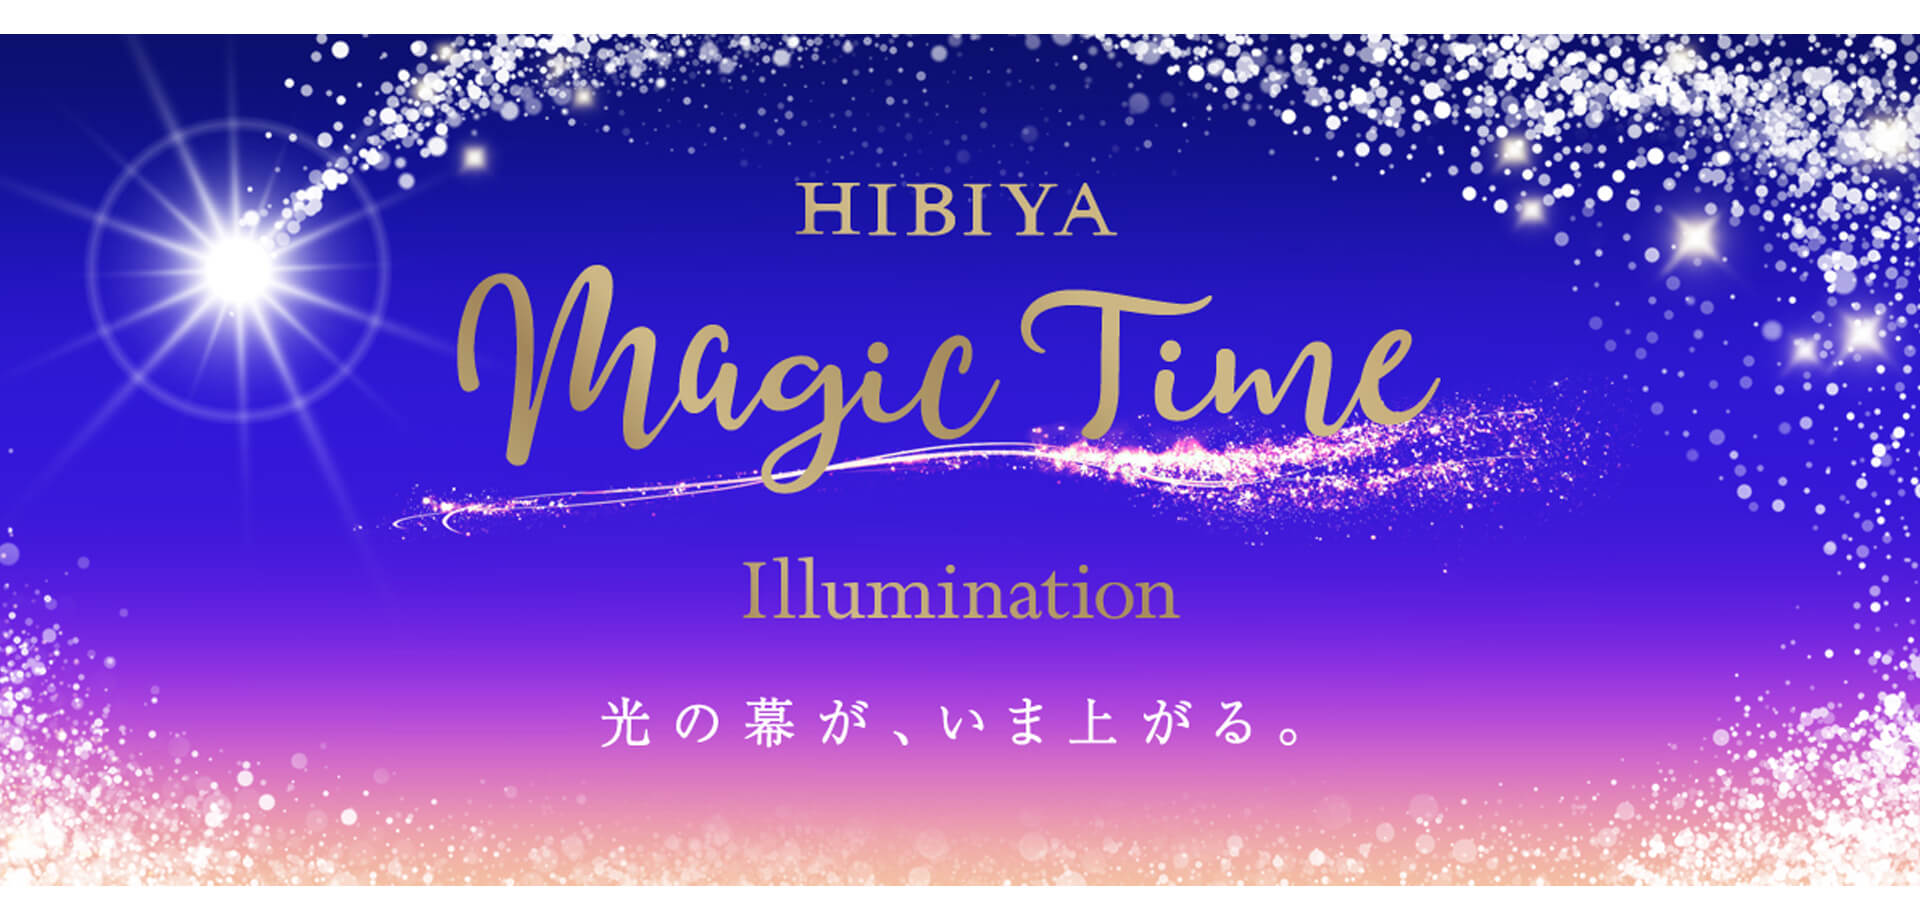 HIBIYA Magic Time Illumination 2021